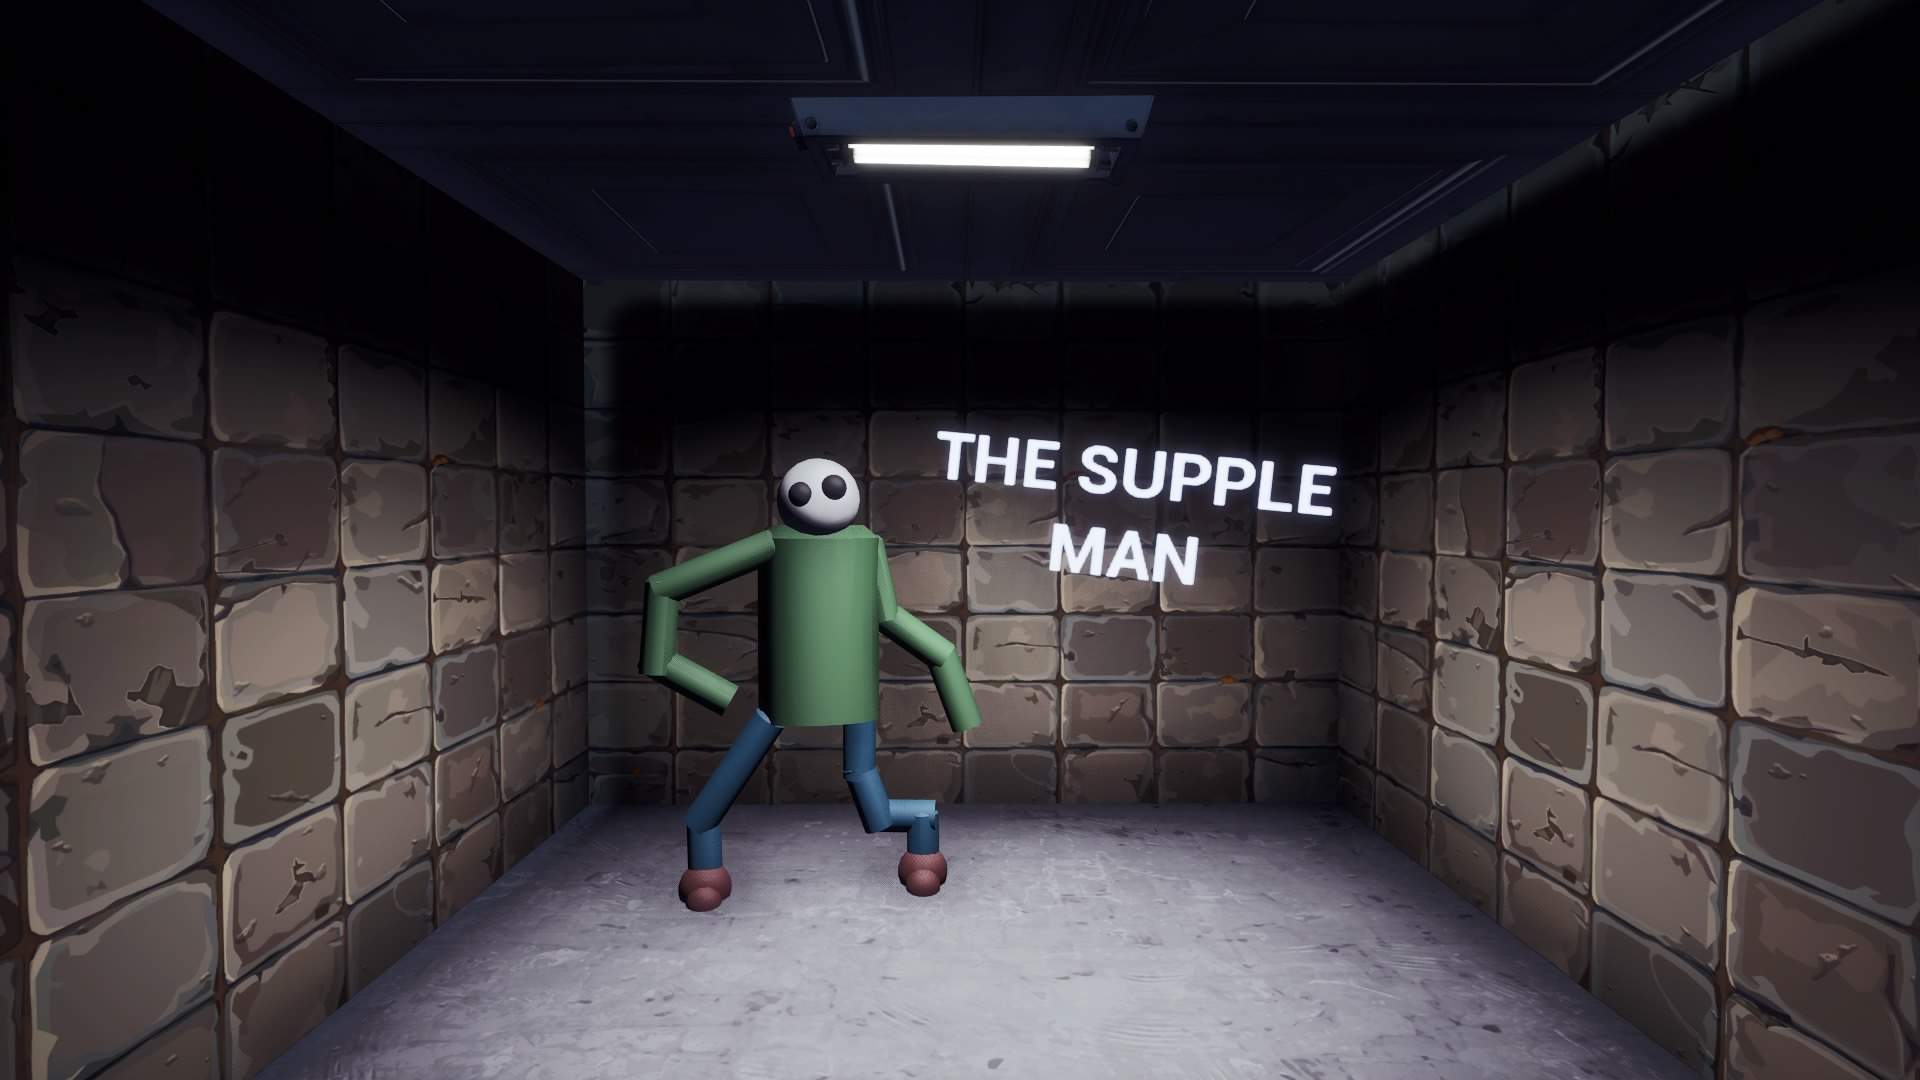 THE SUPPLE MAN